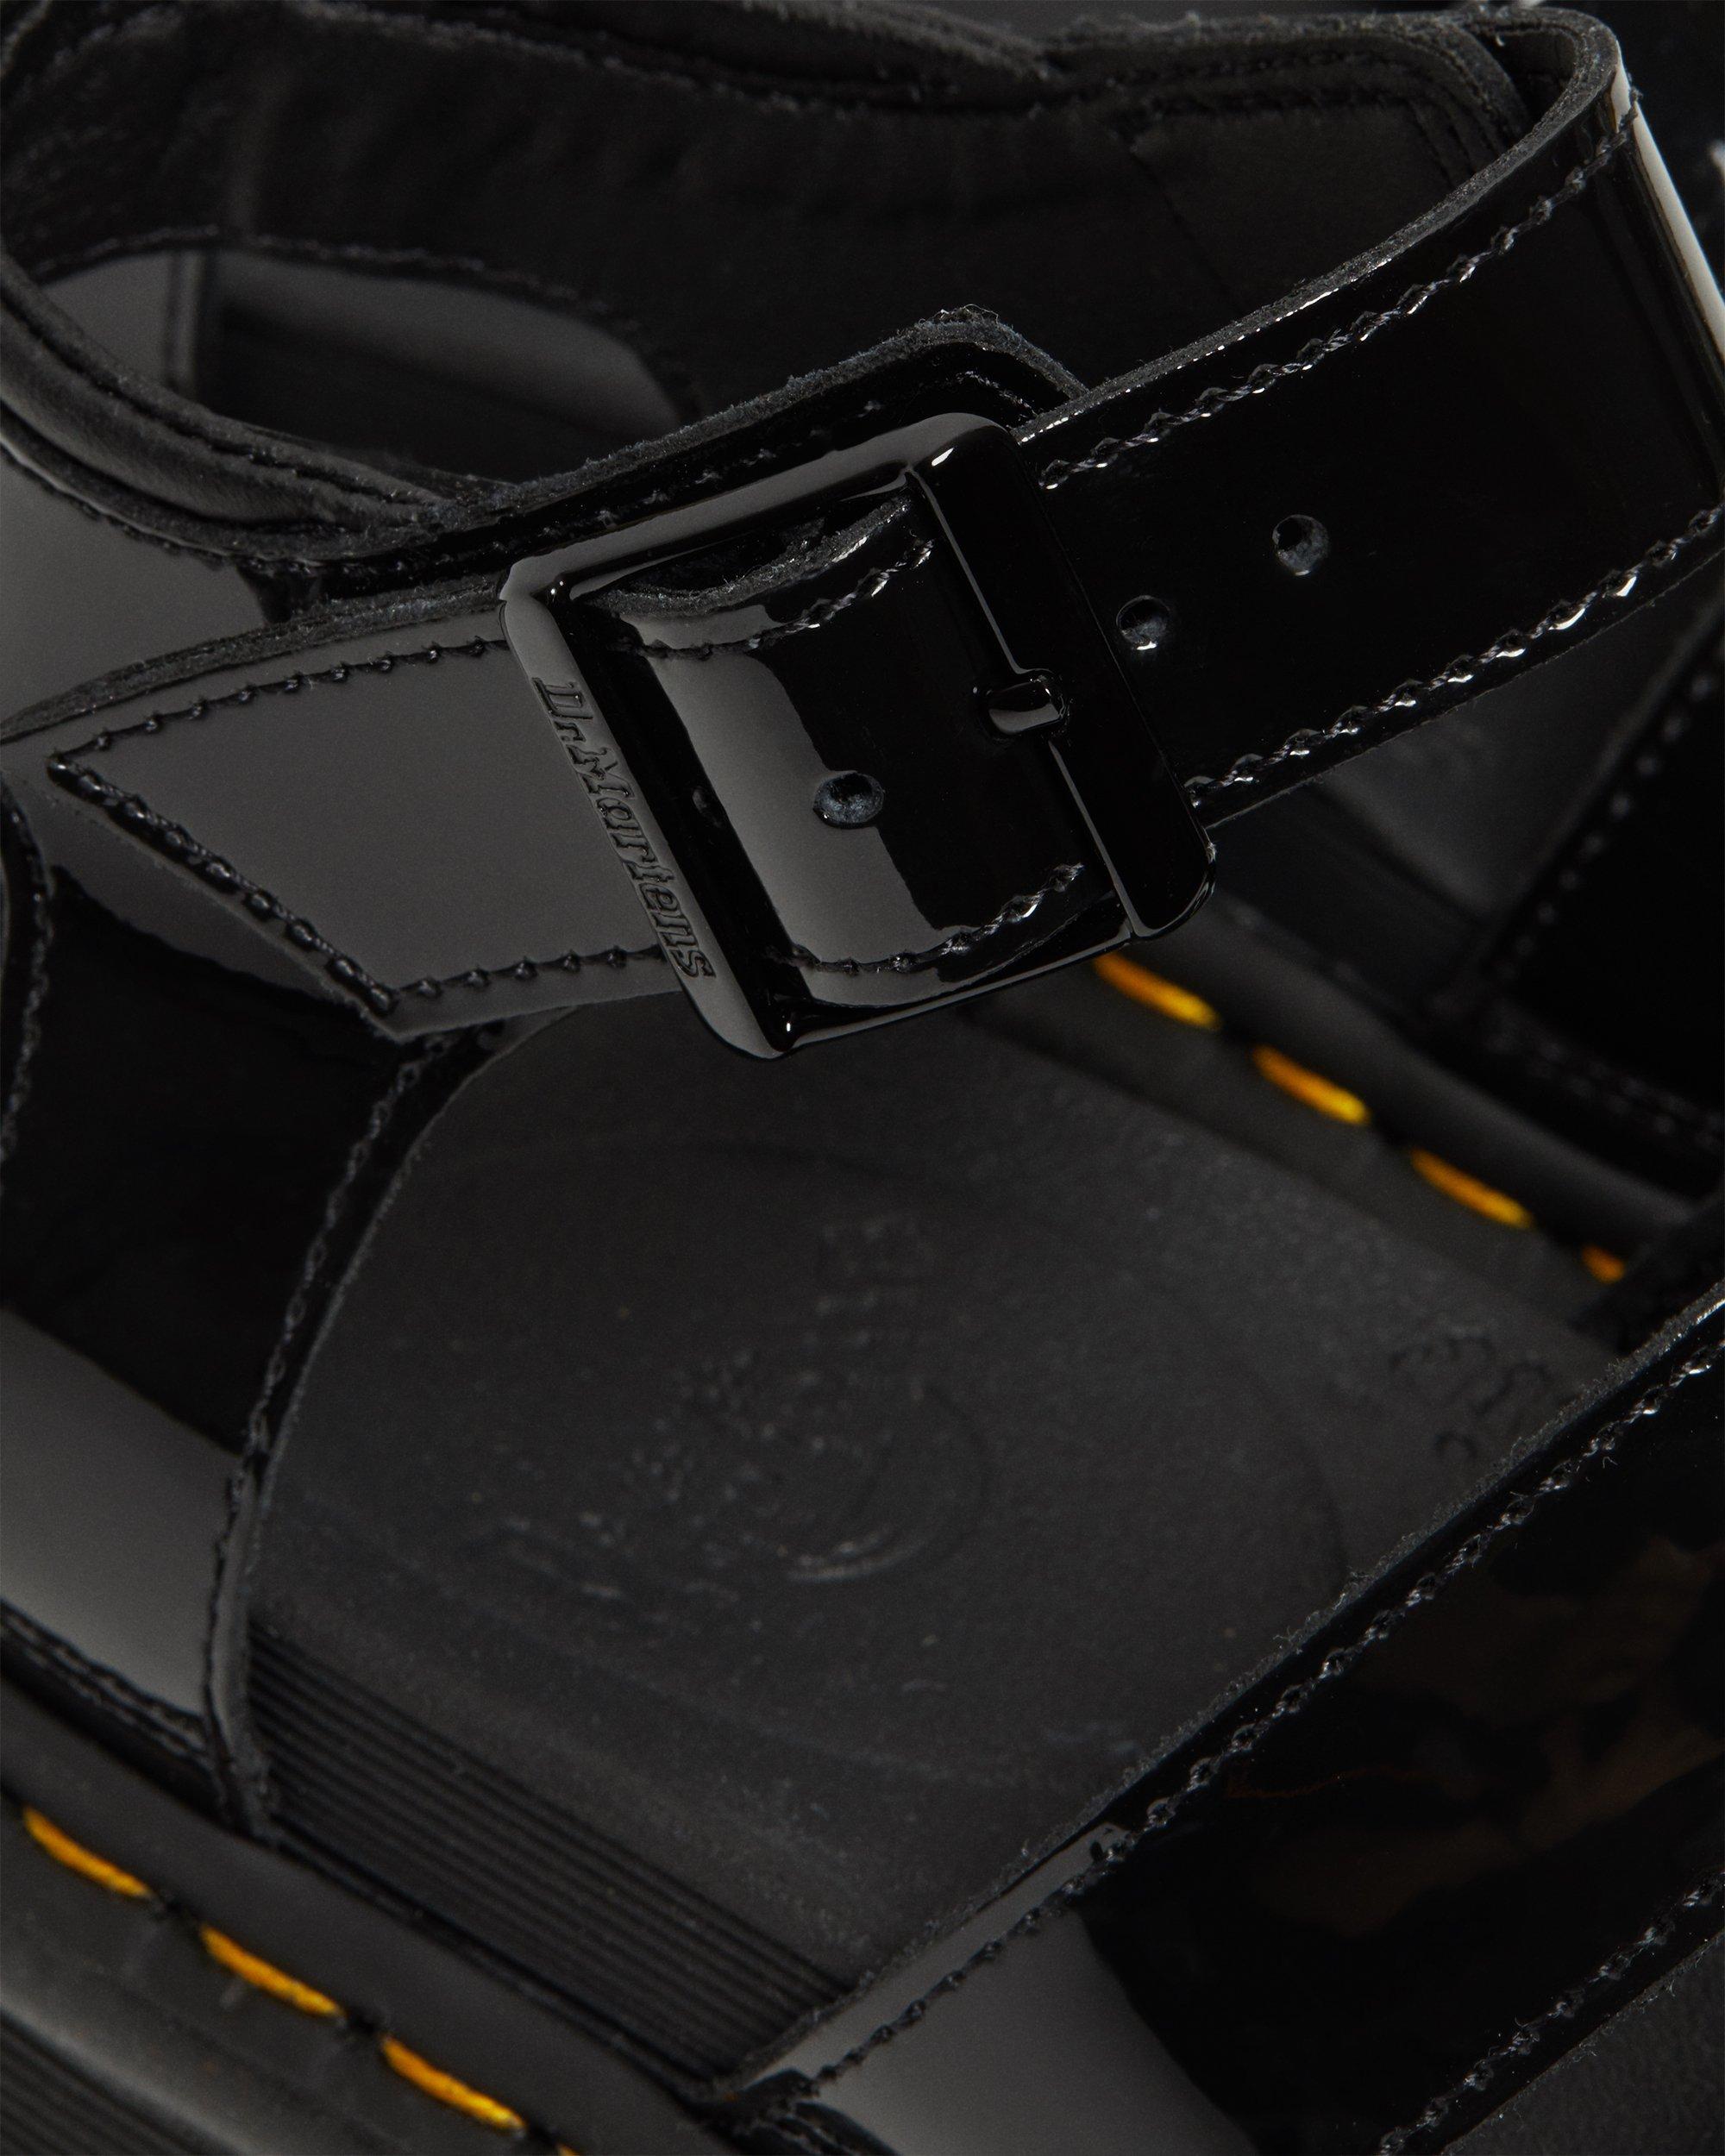 https://i1.adis.ws/i/drmartens/24192001.88.jpg?$large$Blaire Patent Leather Gladiator Sandals Dr. Martens